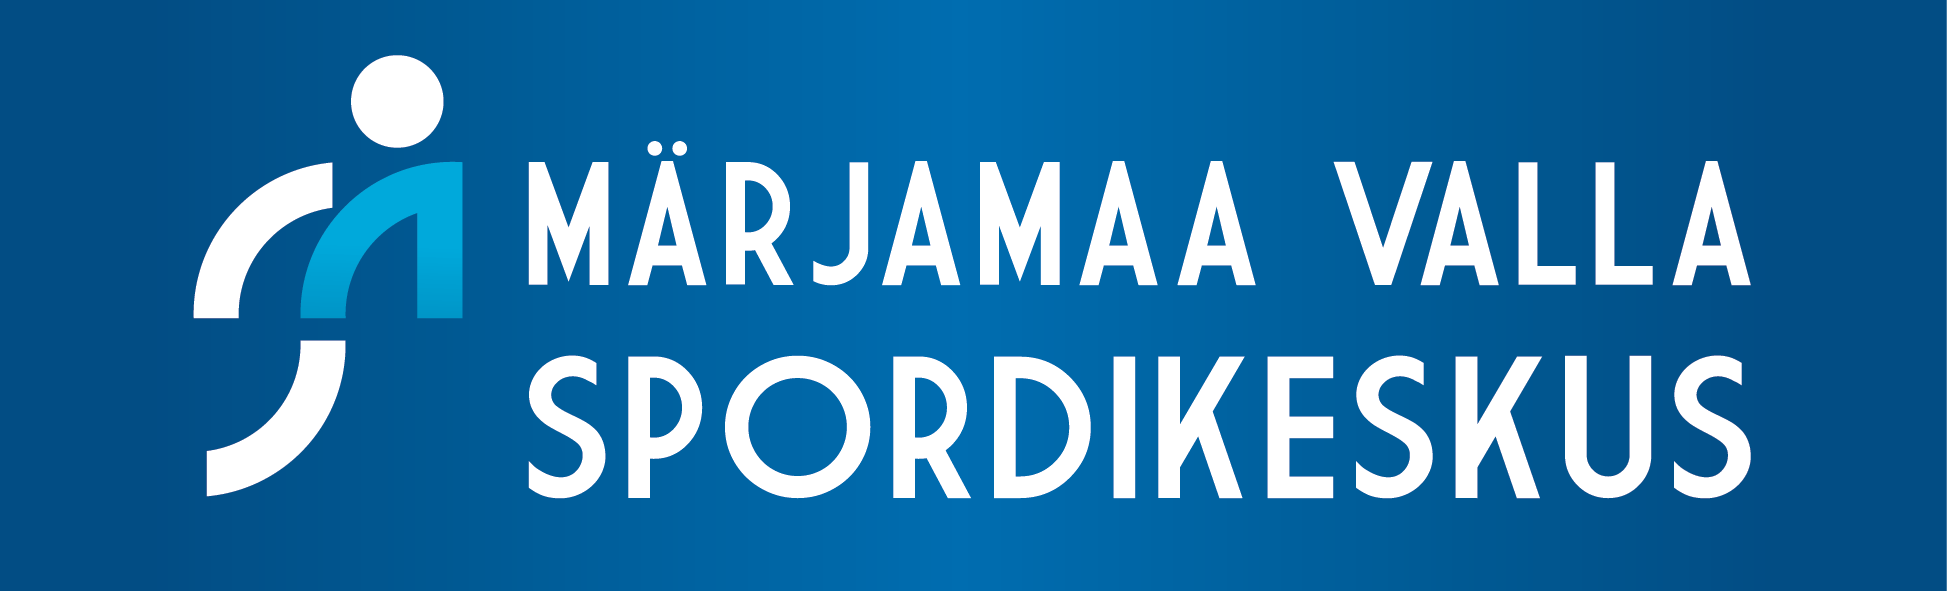 Märjamaa Valla Spordikeskuse logo